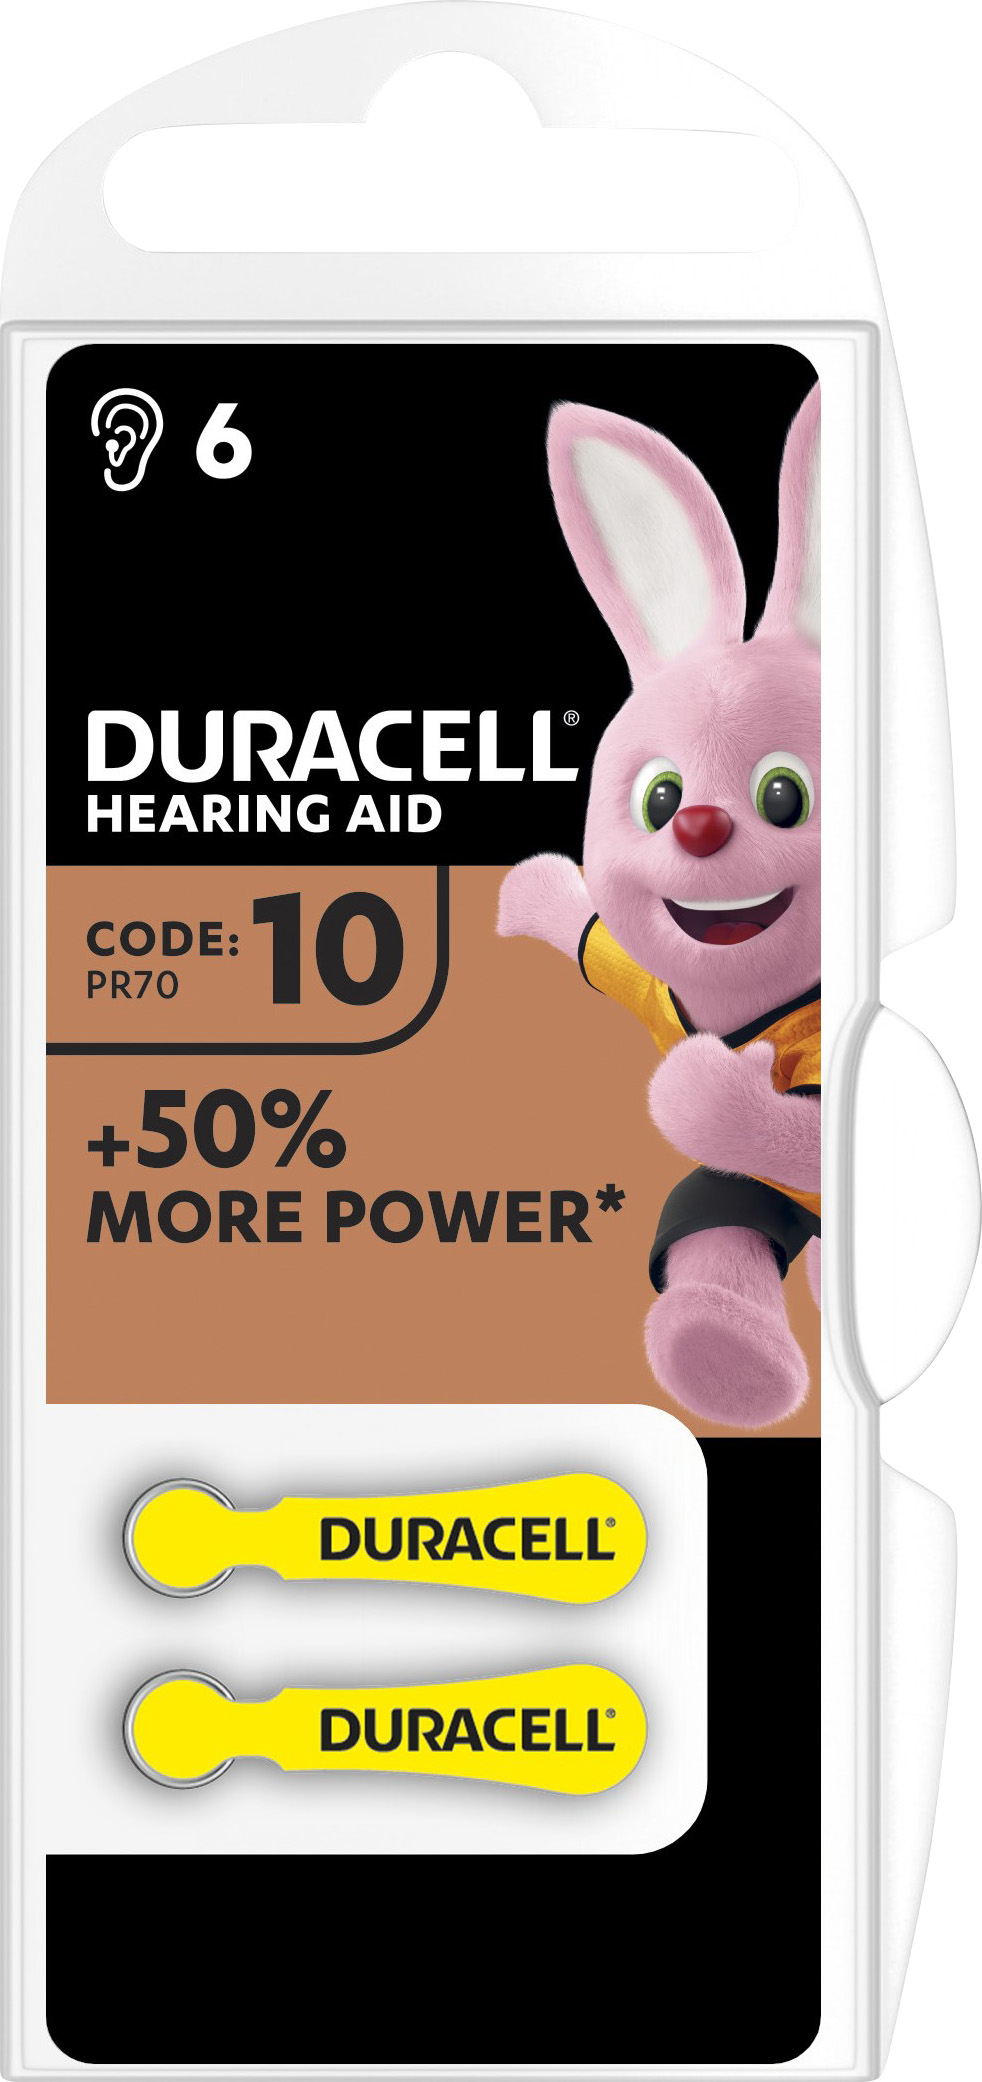 Duracell Batterie Zinc Air, 10, 1.4V Easy Tab, Retail Blister (6-Pack)